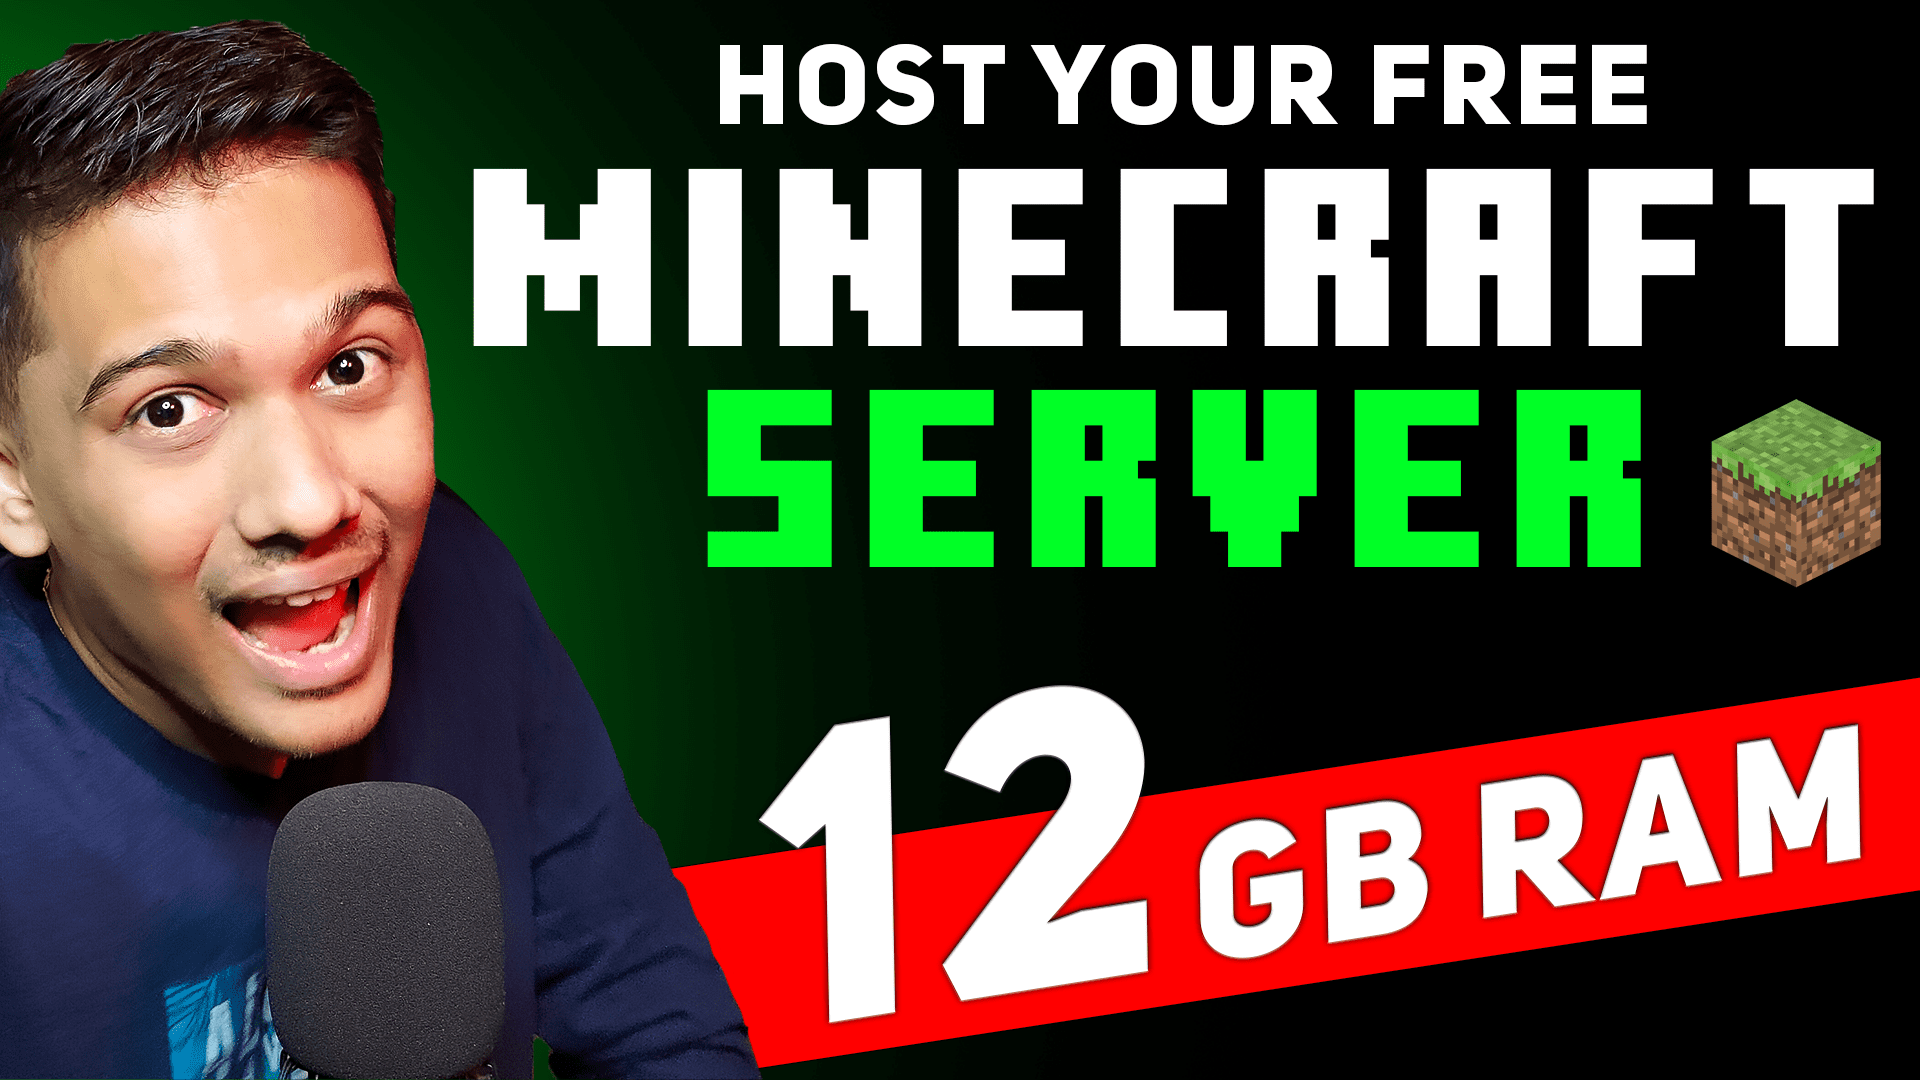  Your free minecraft server!